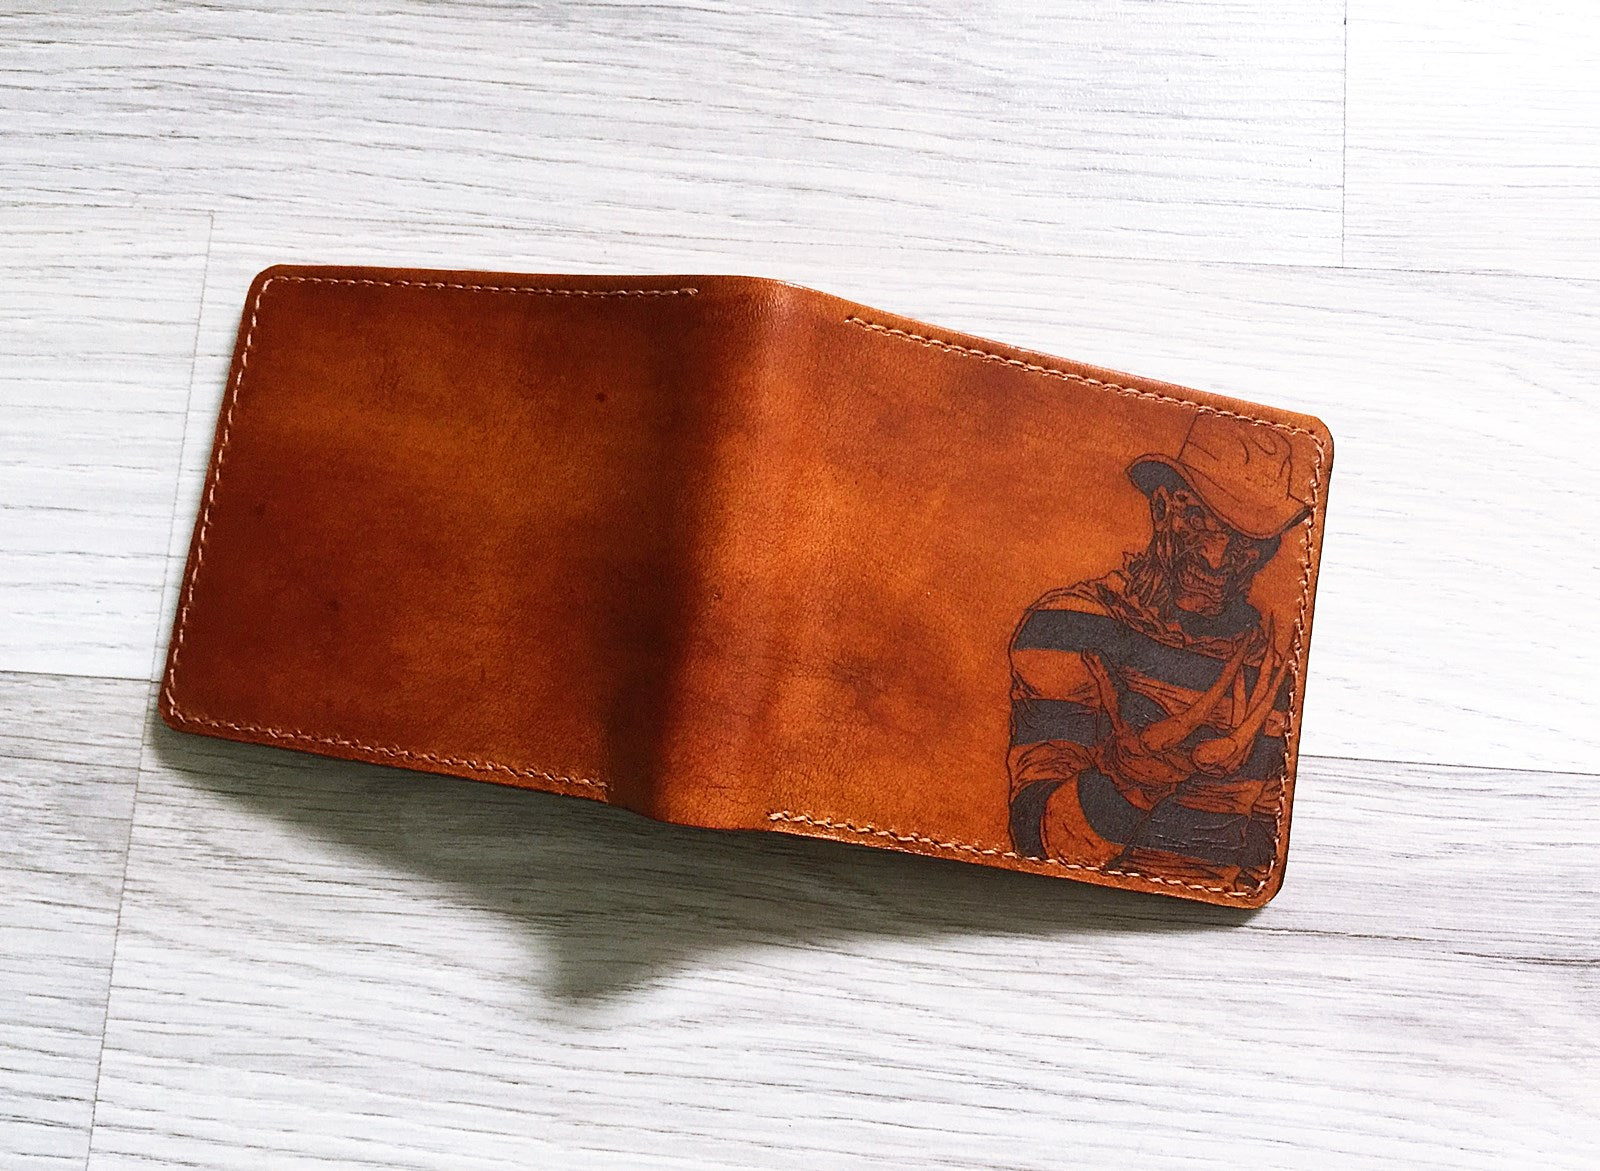 Freddy Krueger leather handmade wallet, custom horror wallet, personalized gift for men in Halloween